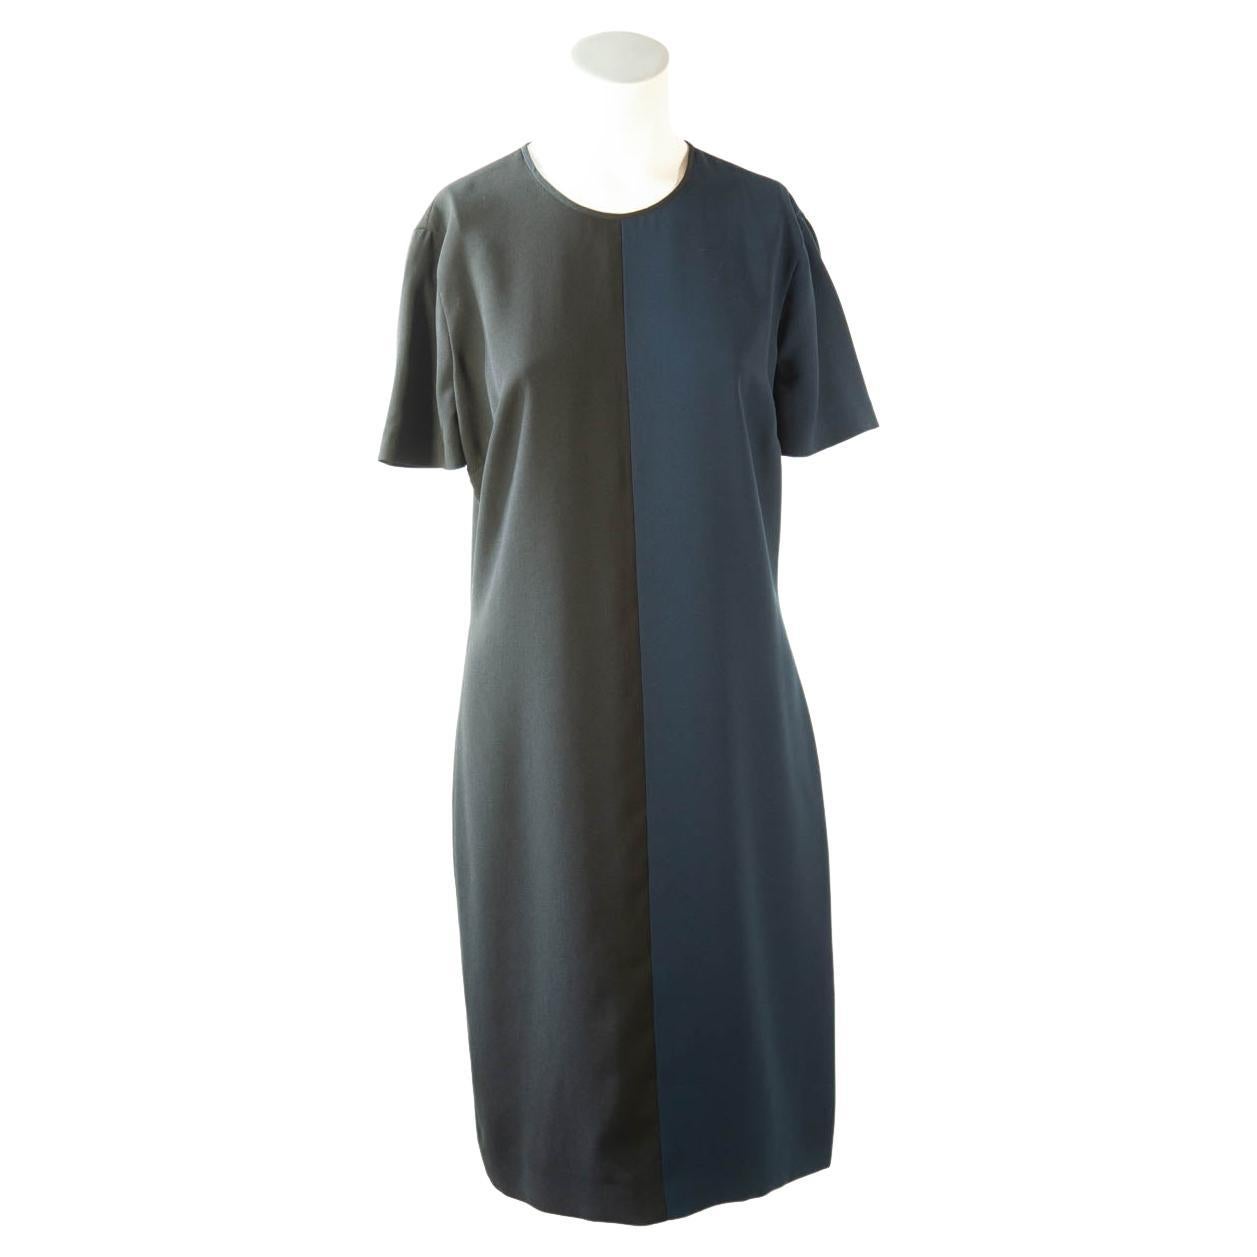 Fendi black and navy color block dress